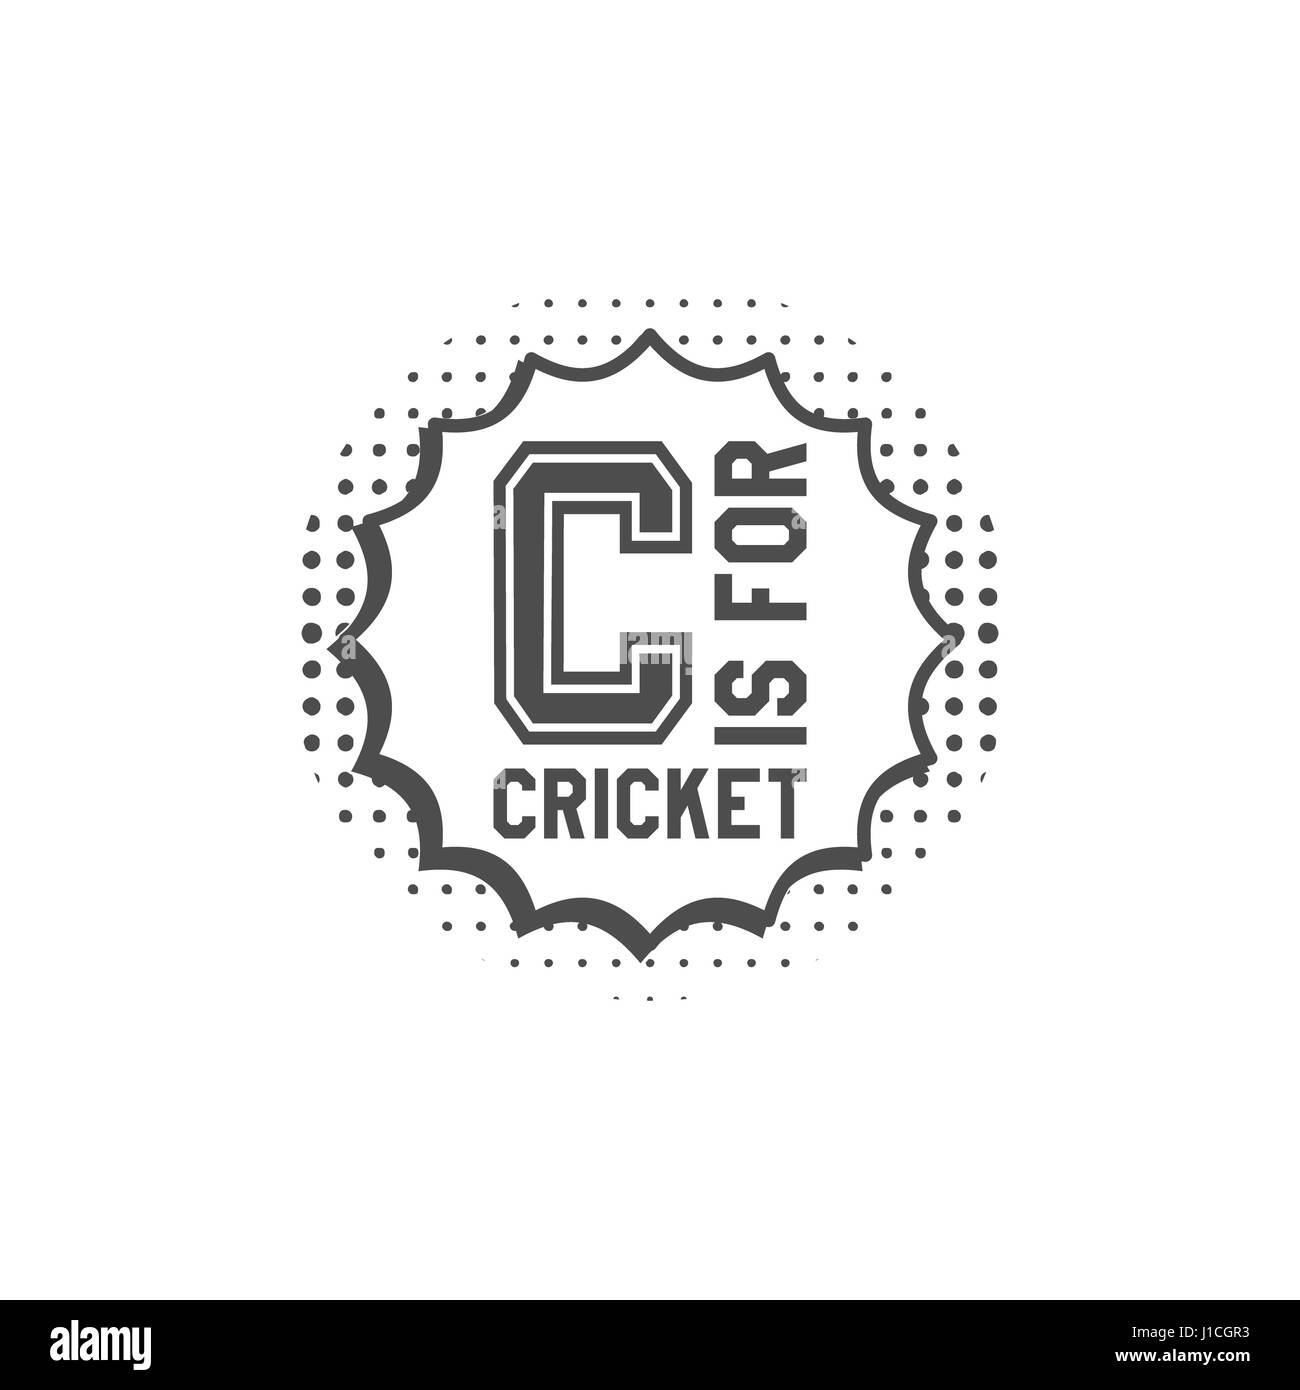 Cricket monogram emblem and design elements. Cricket logo design in pop art style. Cricket club badge. Sports sticker. Monochrome dotted background. U Stock Photo